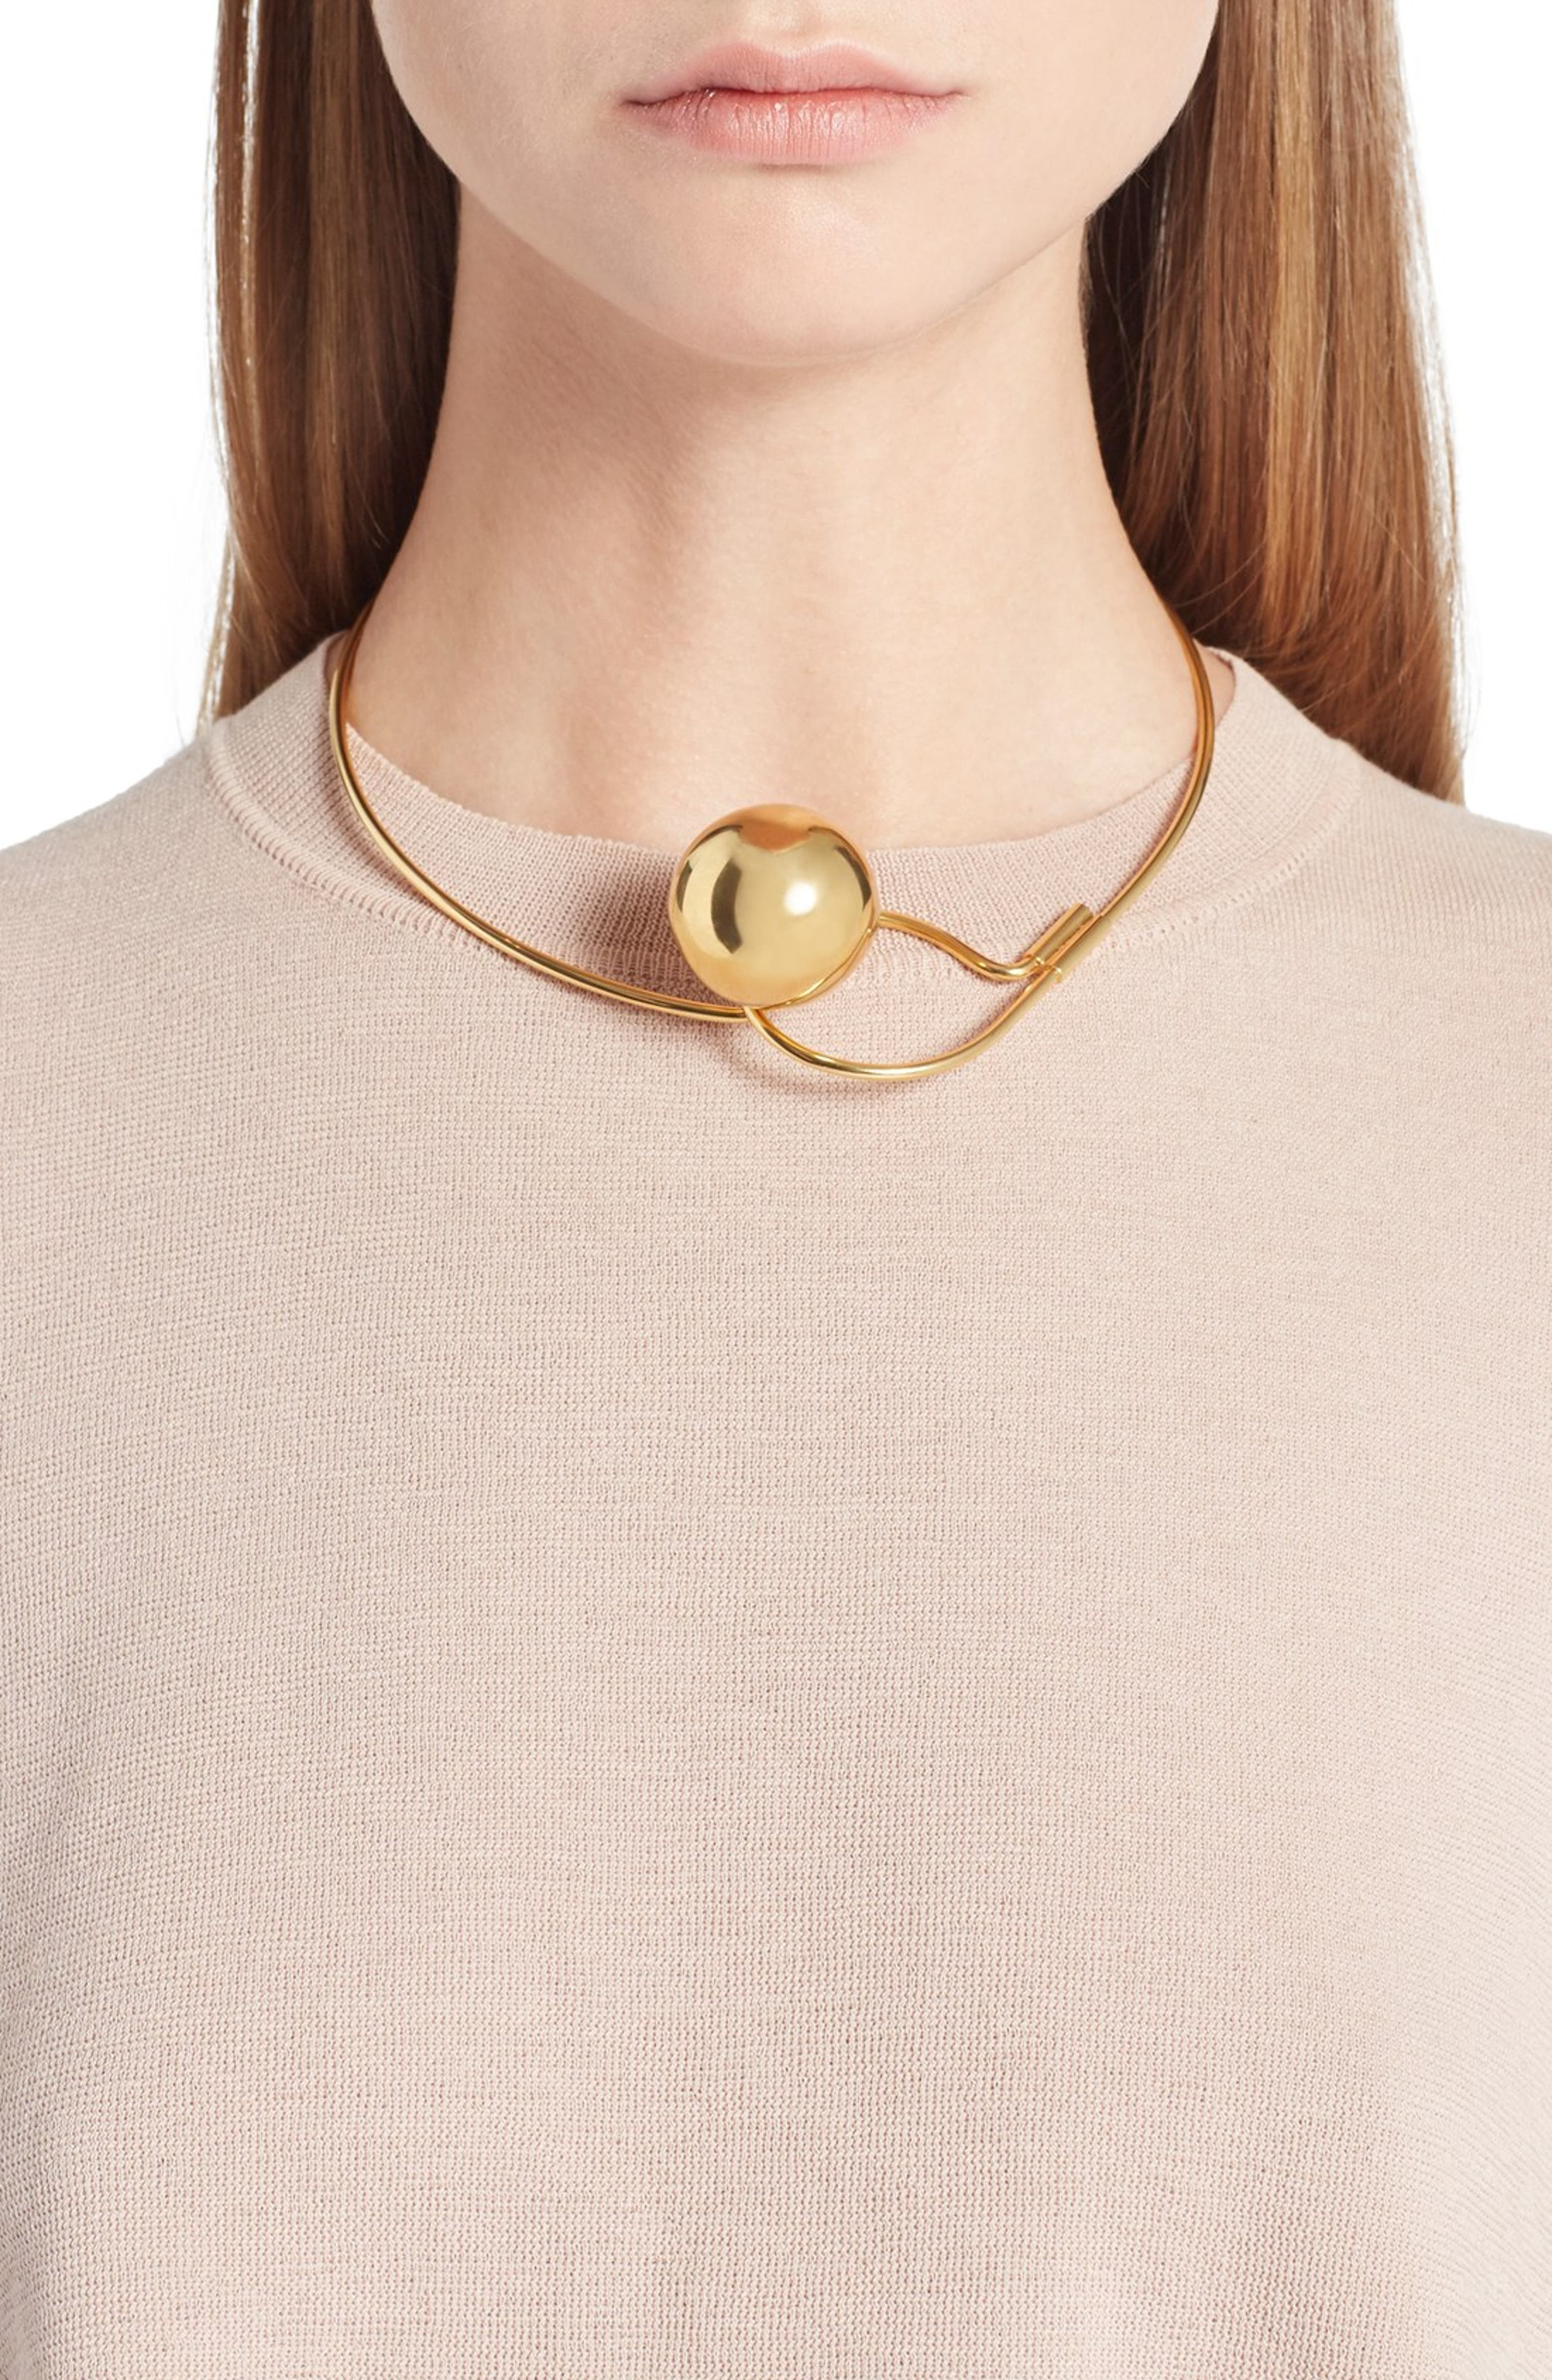 Marni Sphere Necklace | Nordstrom